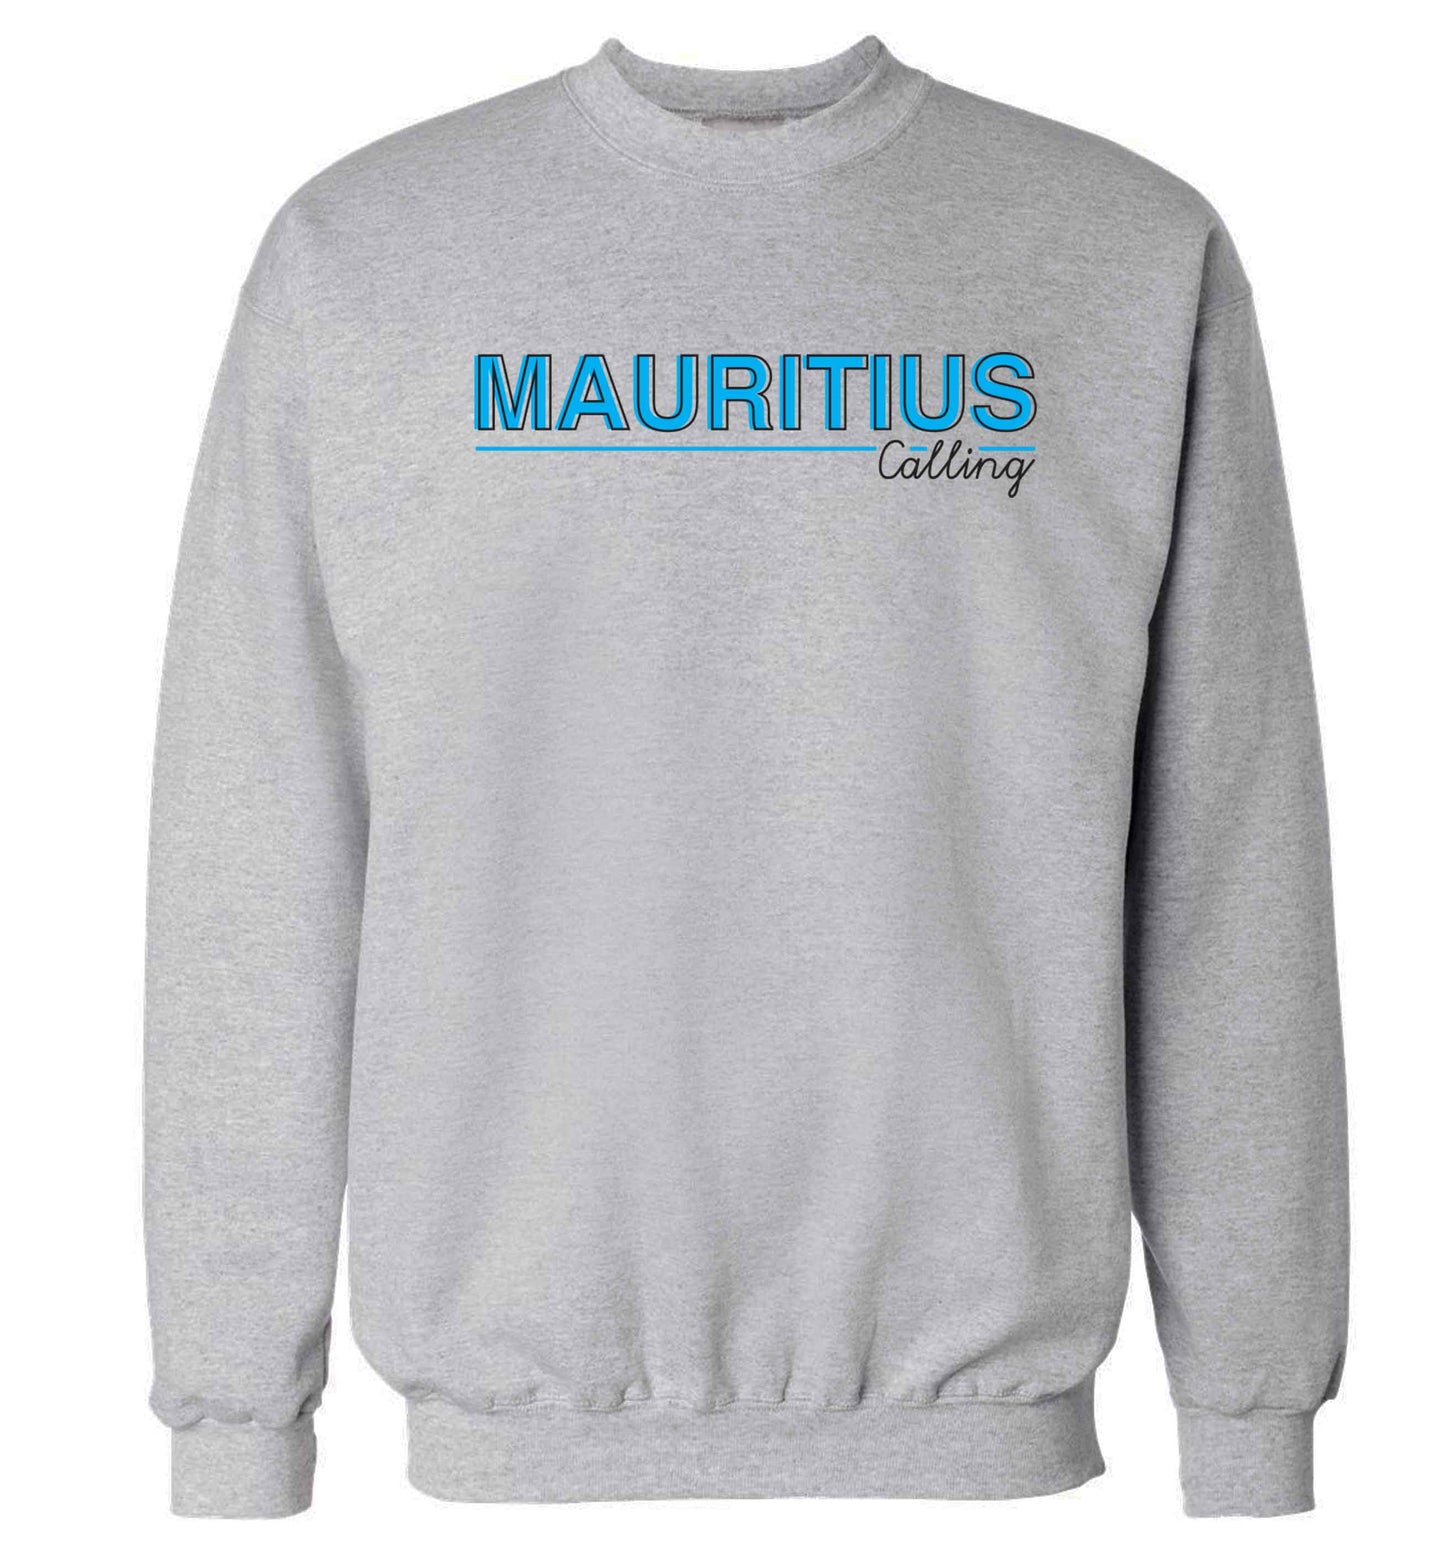 Mauritius calling Adult's unisex grey Sweater 2XL